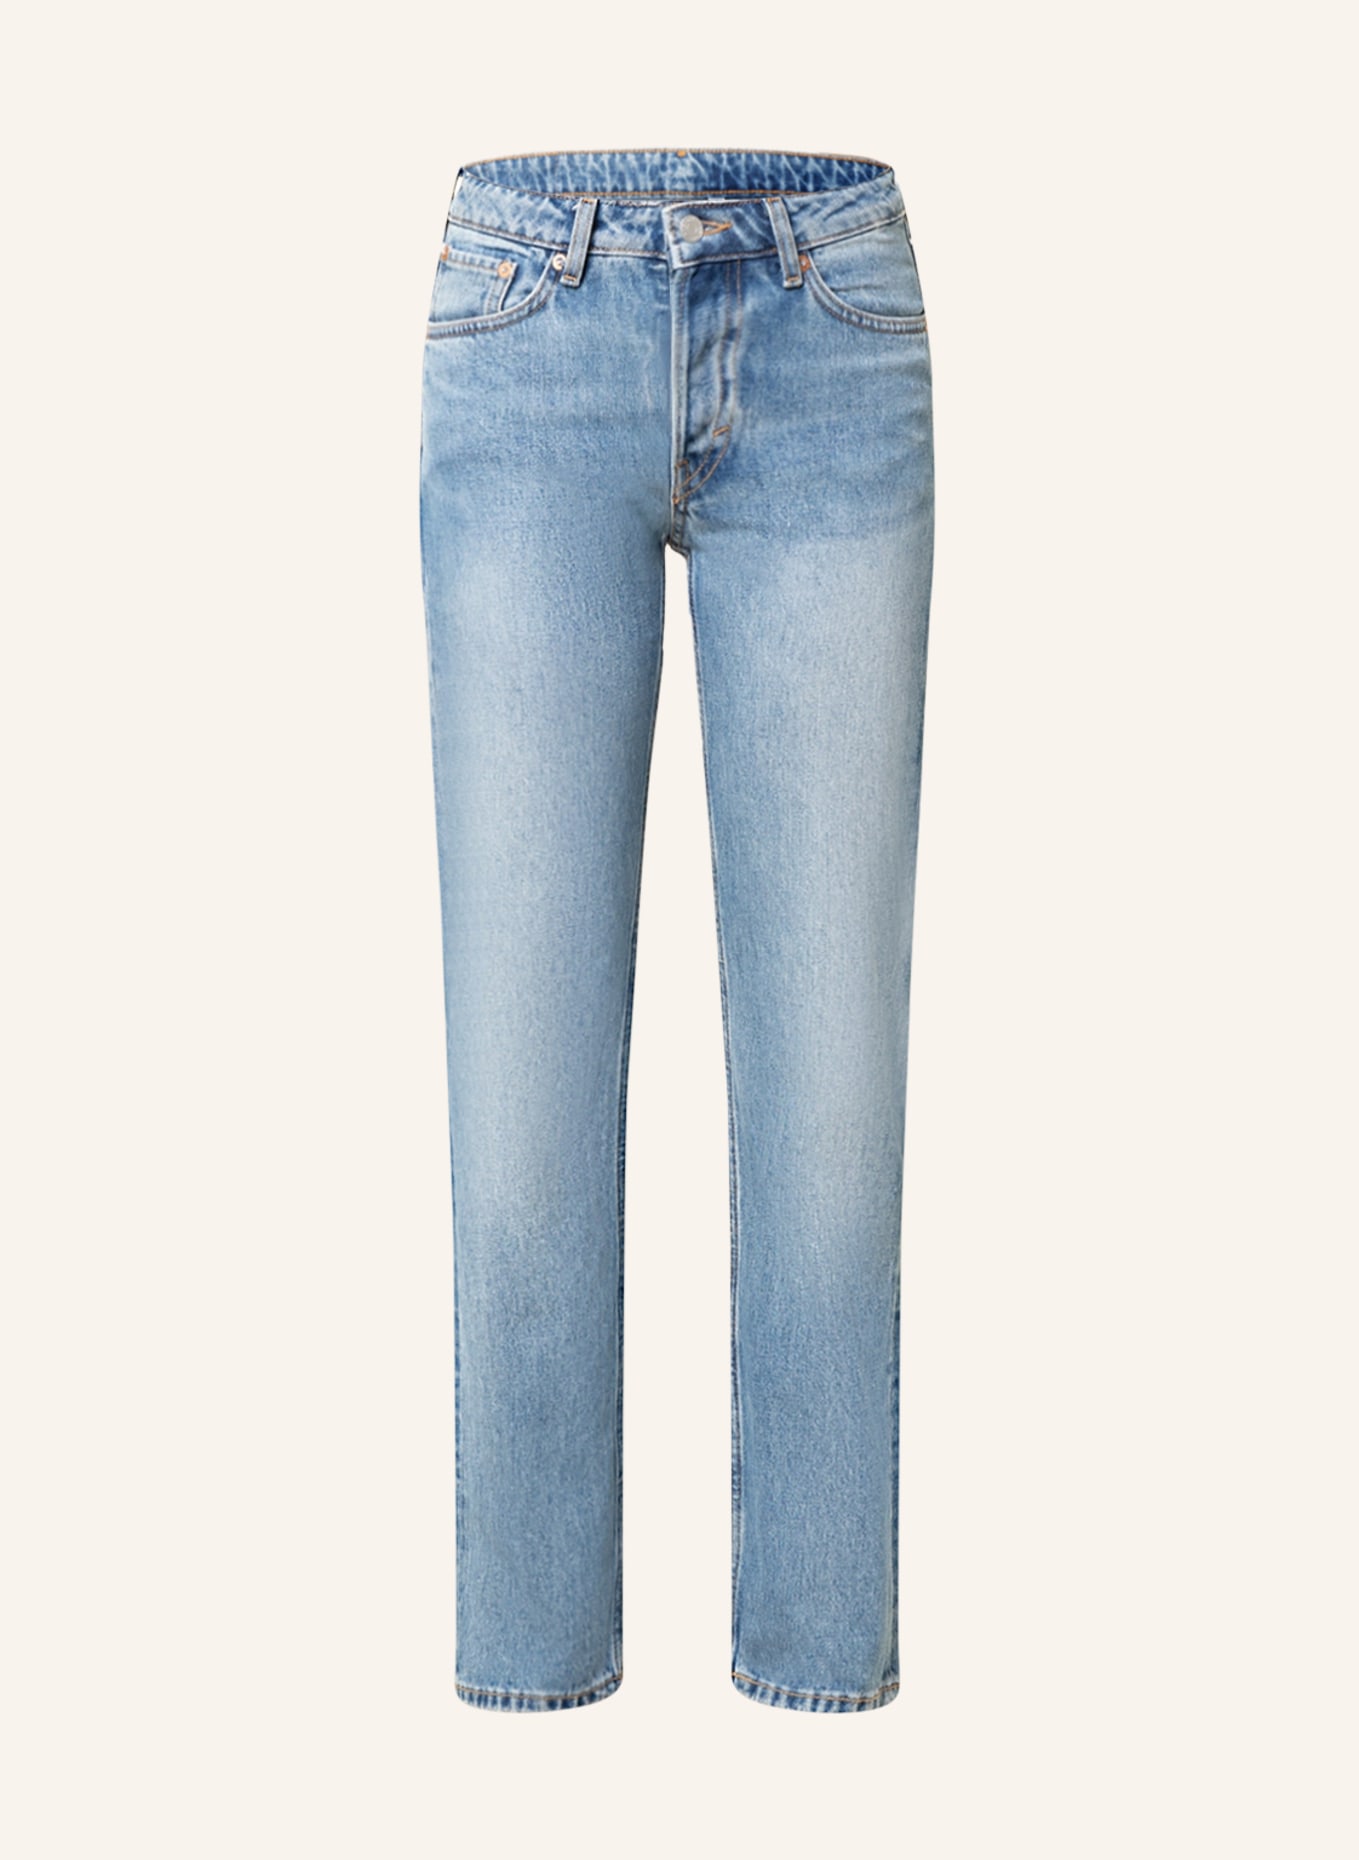 WEEKDAY Straight Jeans , Farbe: Blue Medium dusty (Bild 1)